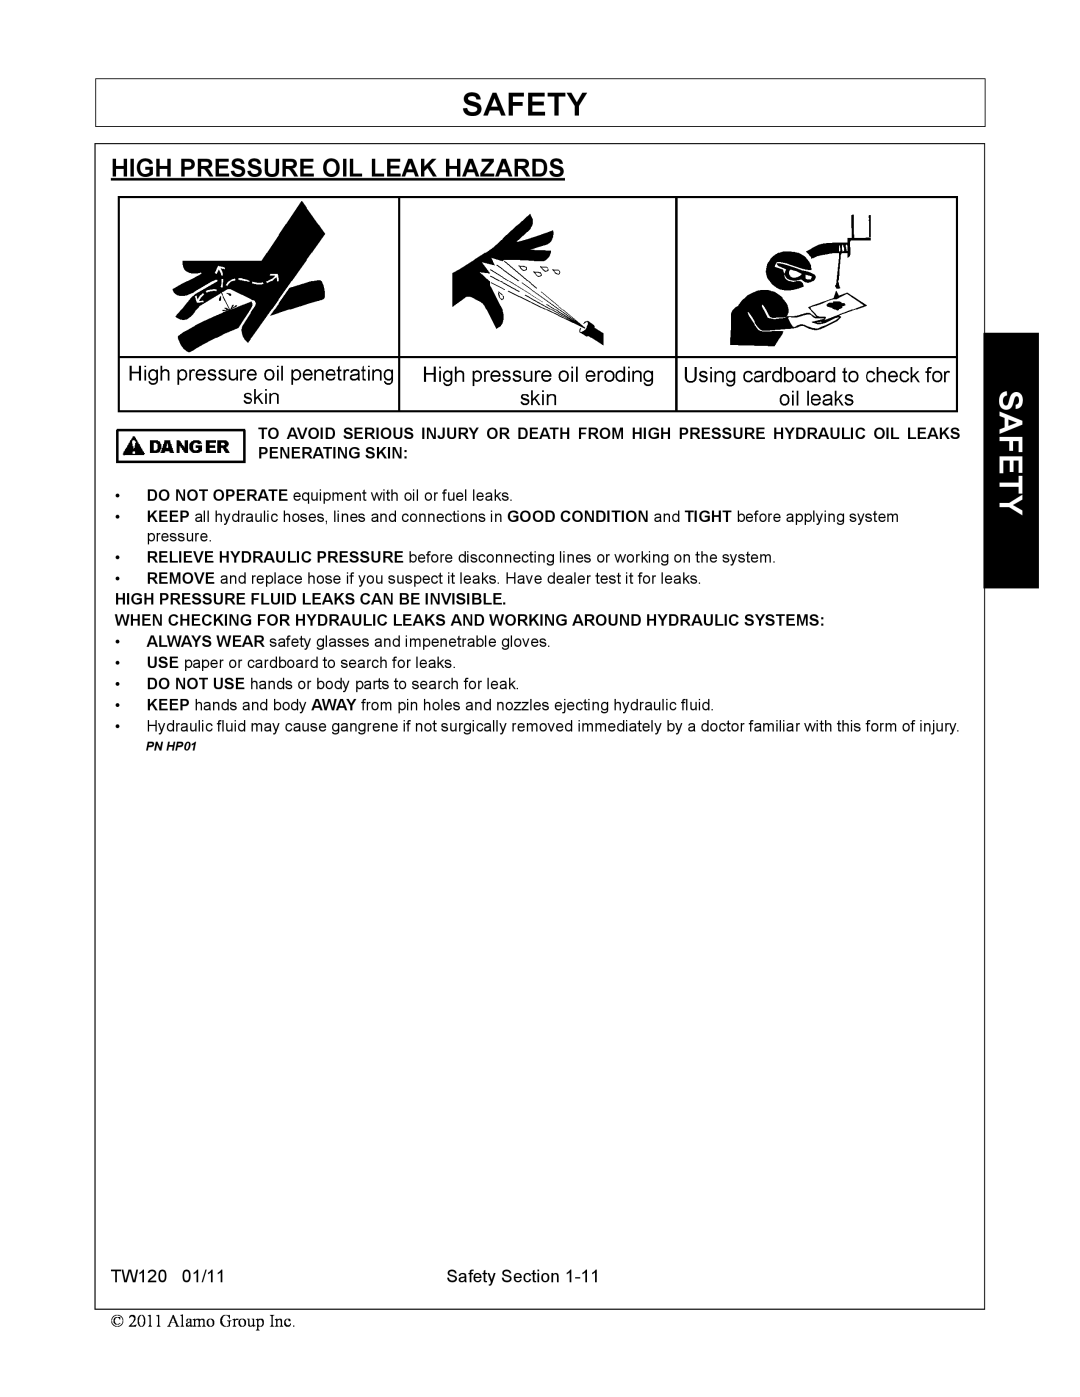 Blue Rhino FC-0025, FC-0024 manual High Pressure Oil Leak Hazards, Safety 